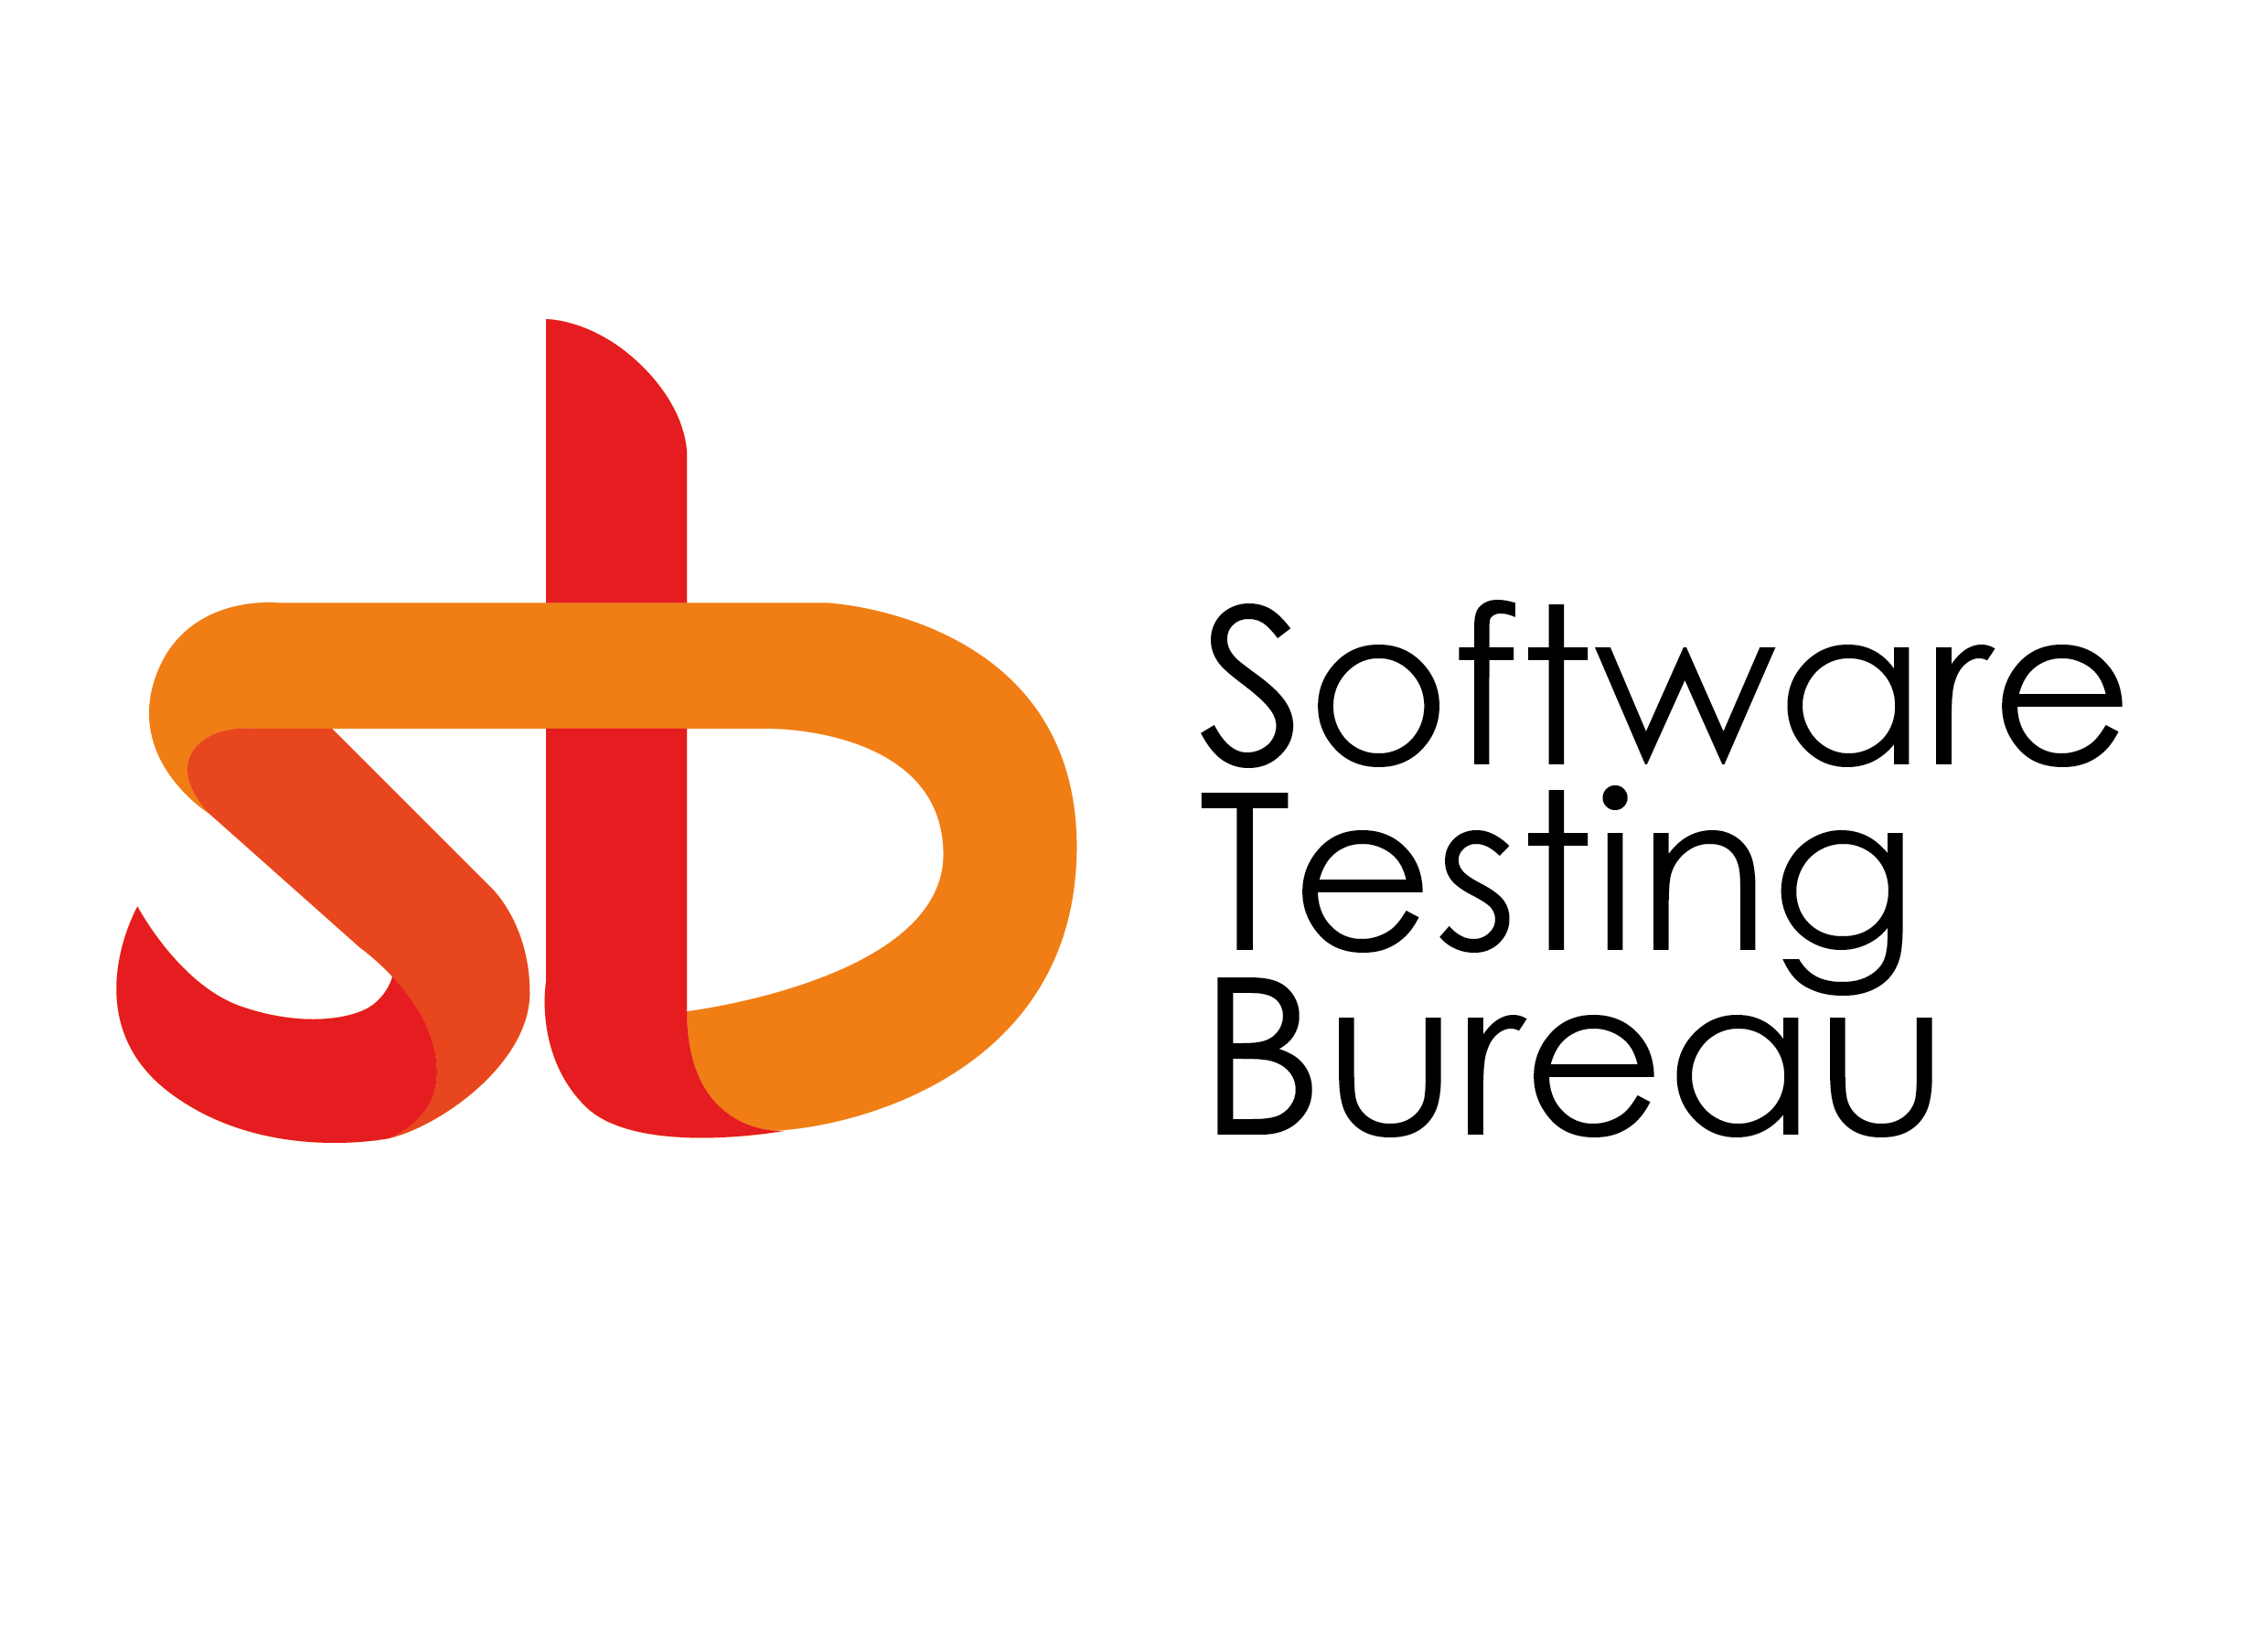 Software Testing Bureau's logo